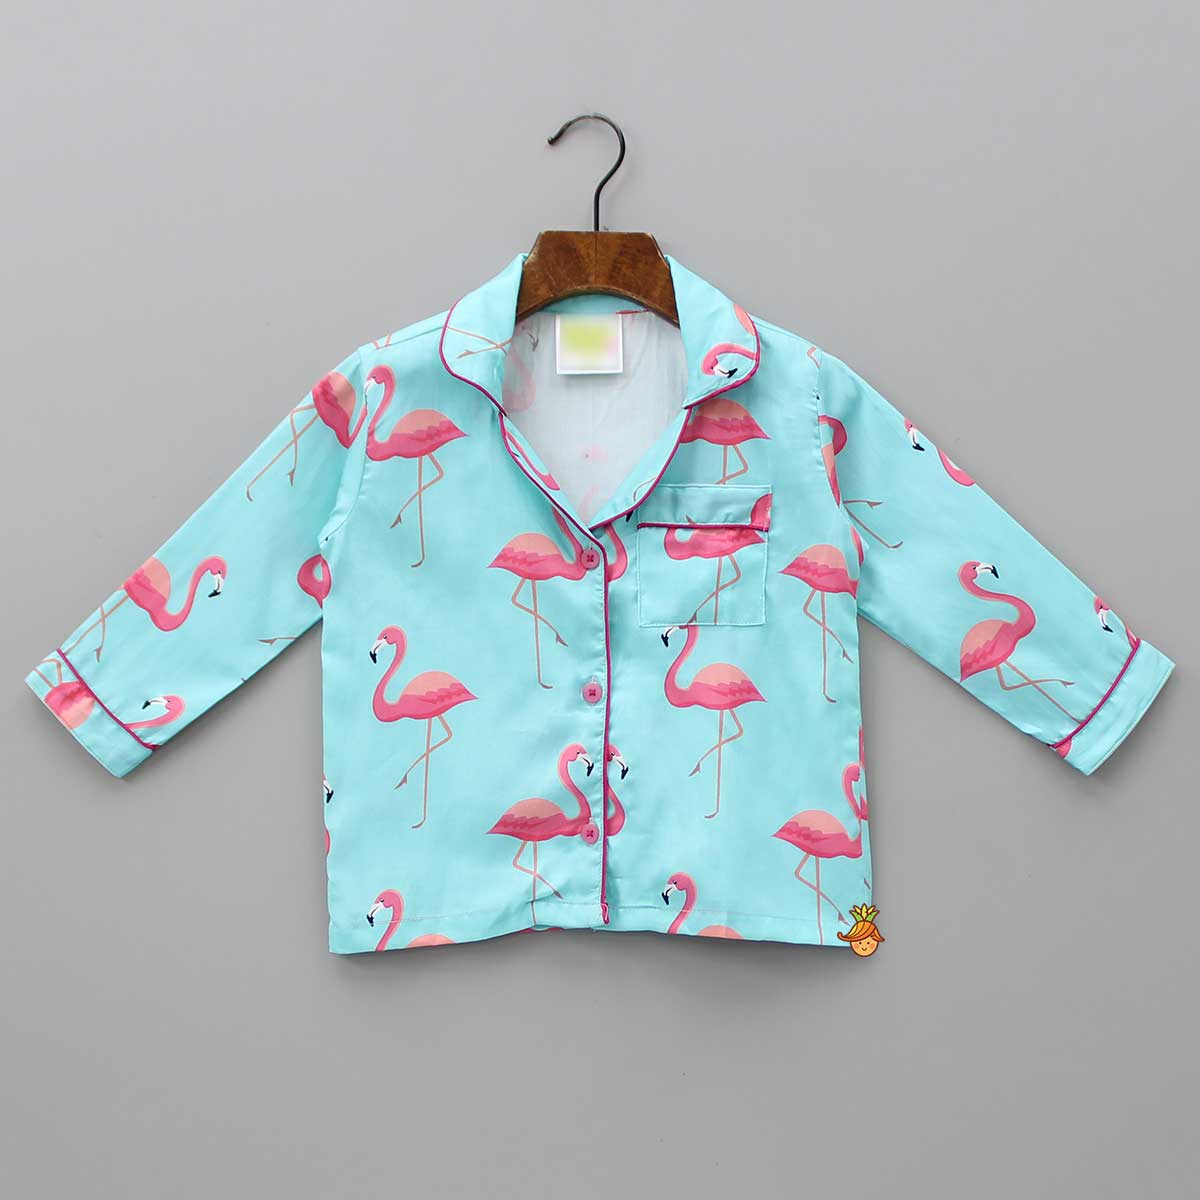 Flamingo Printed Sleepwear